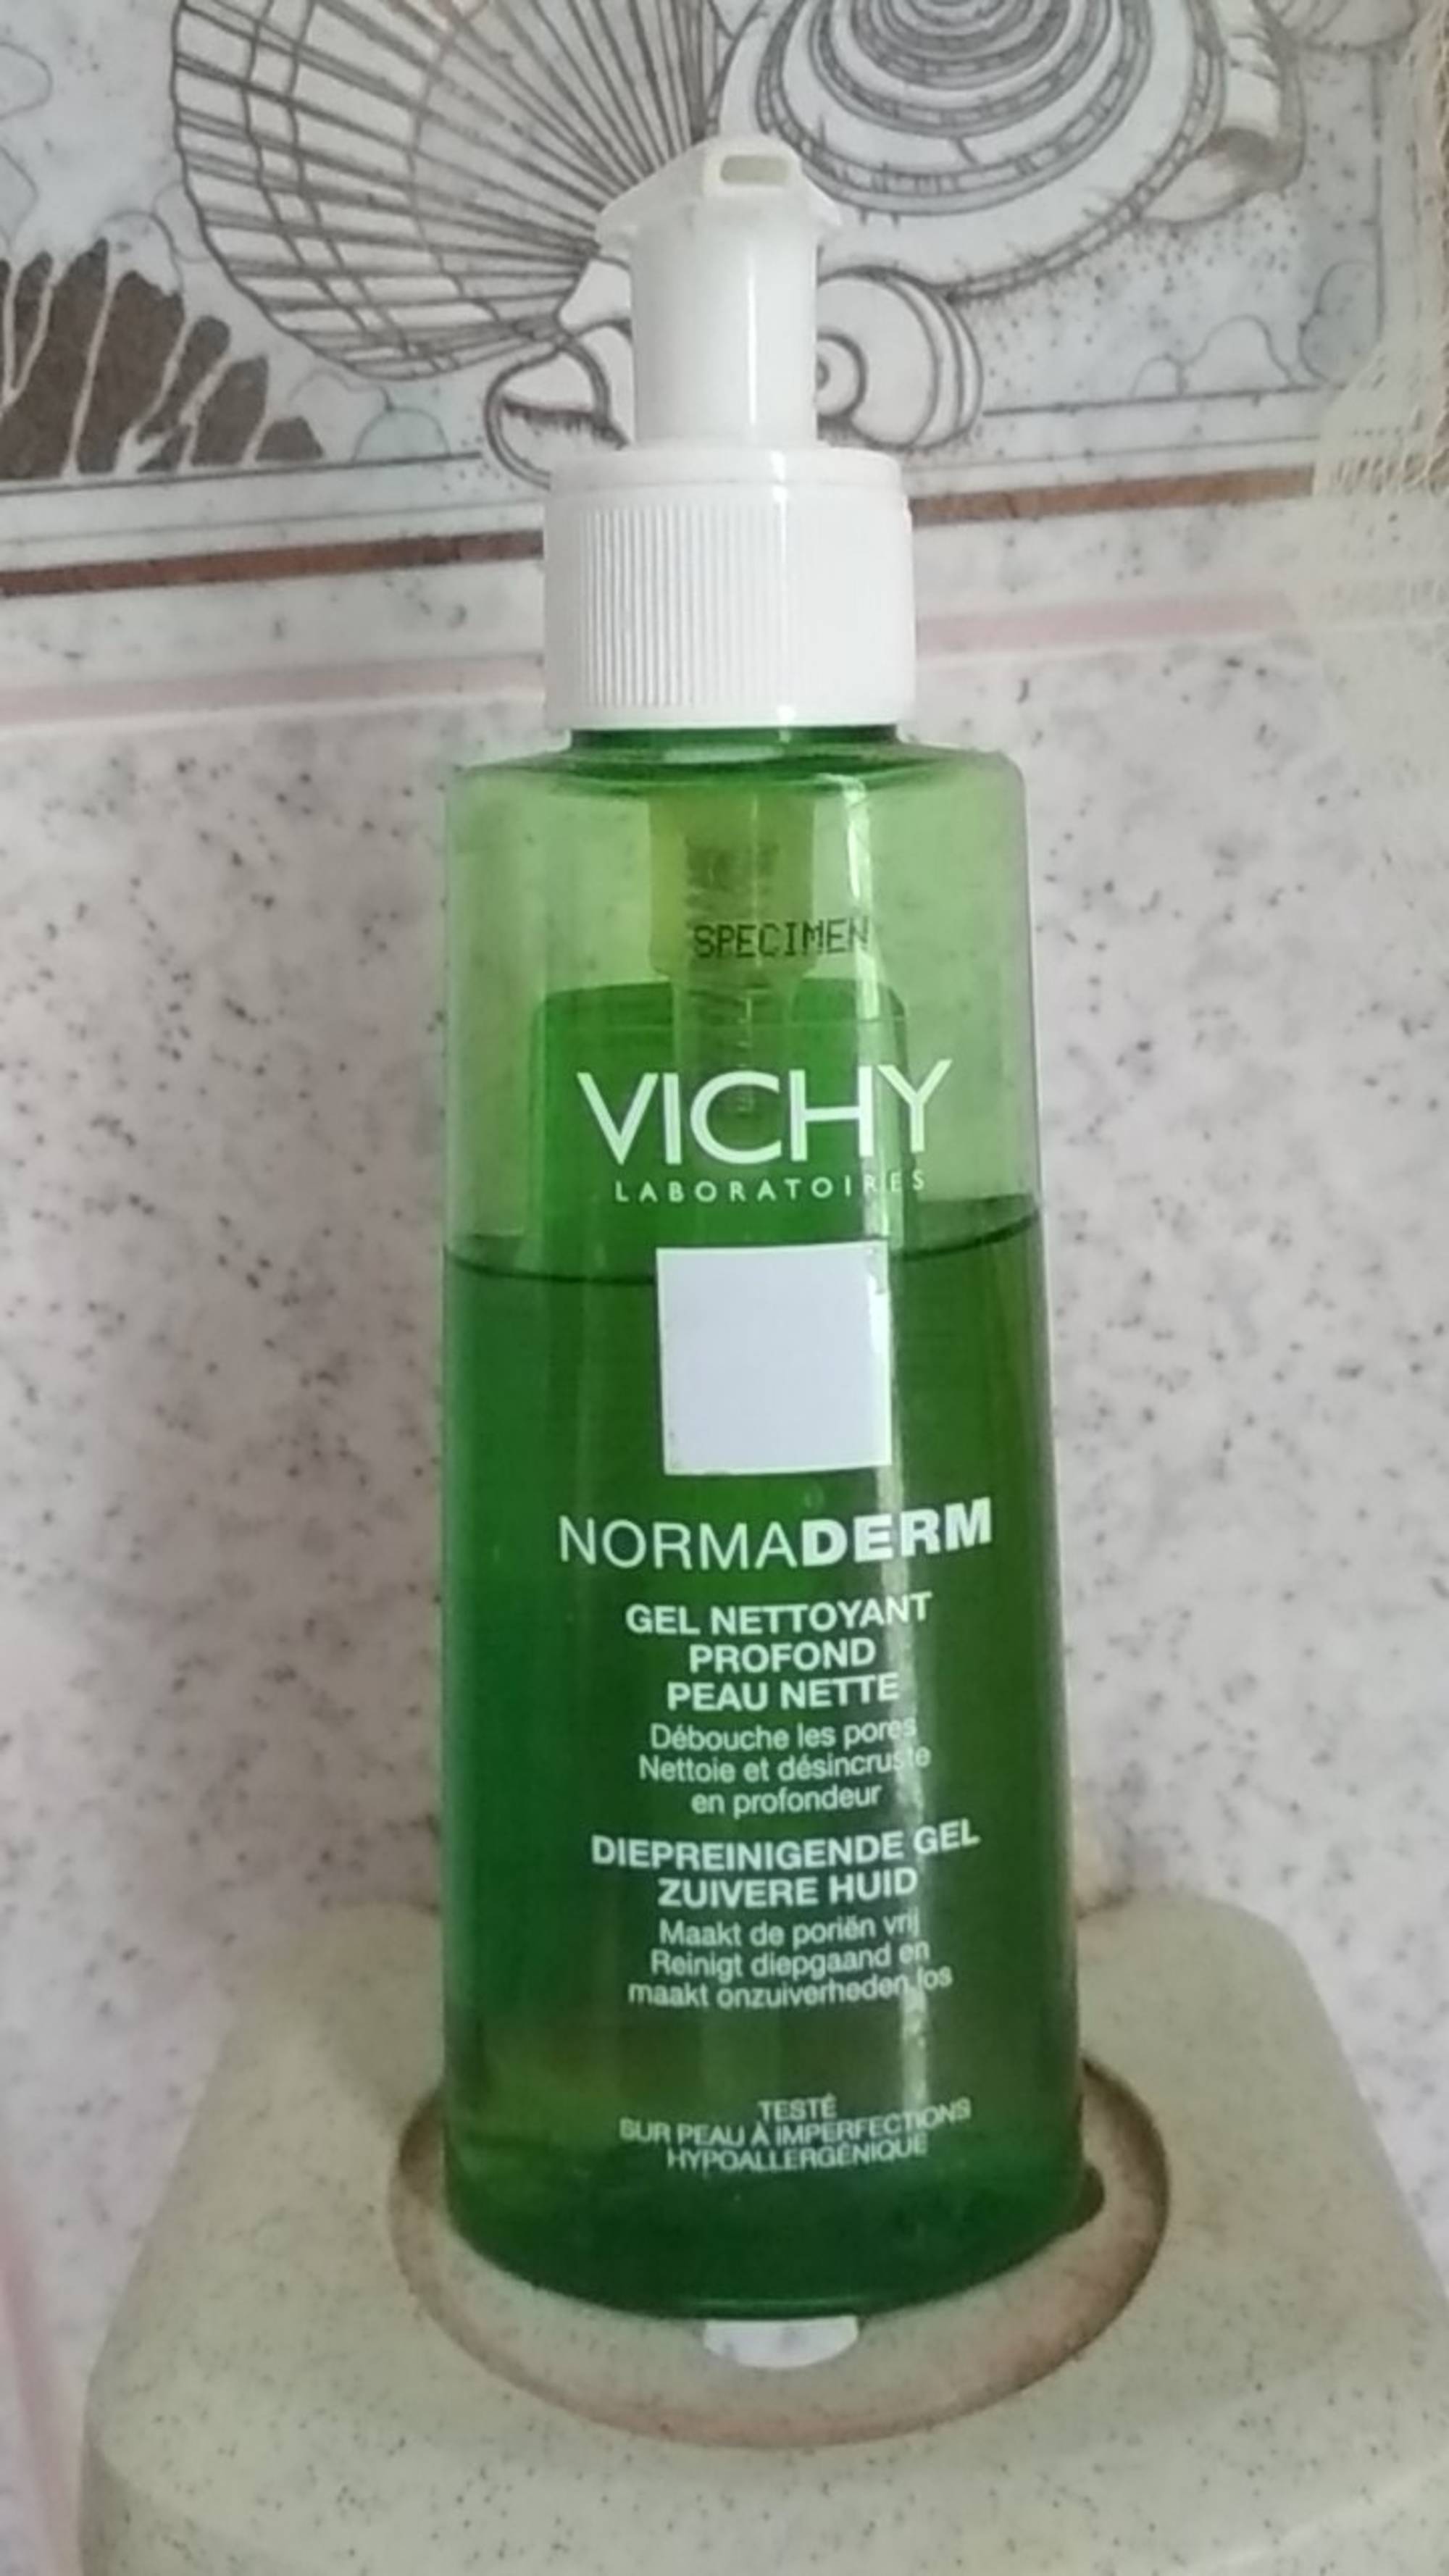 VICHY - Normaderm - Gel nettoyant profond peau nette